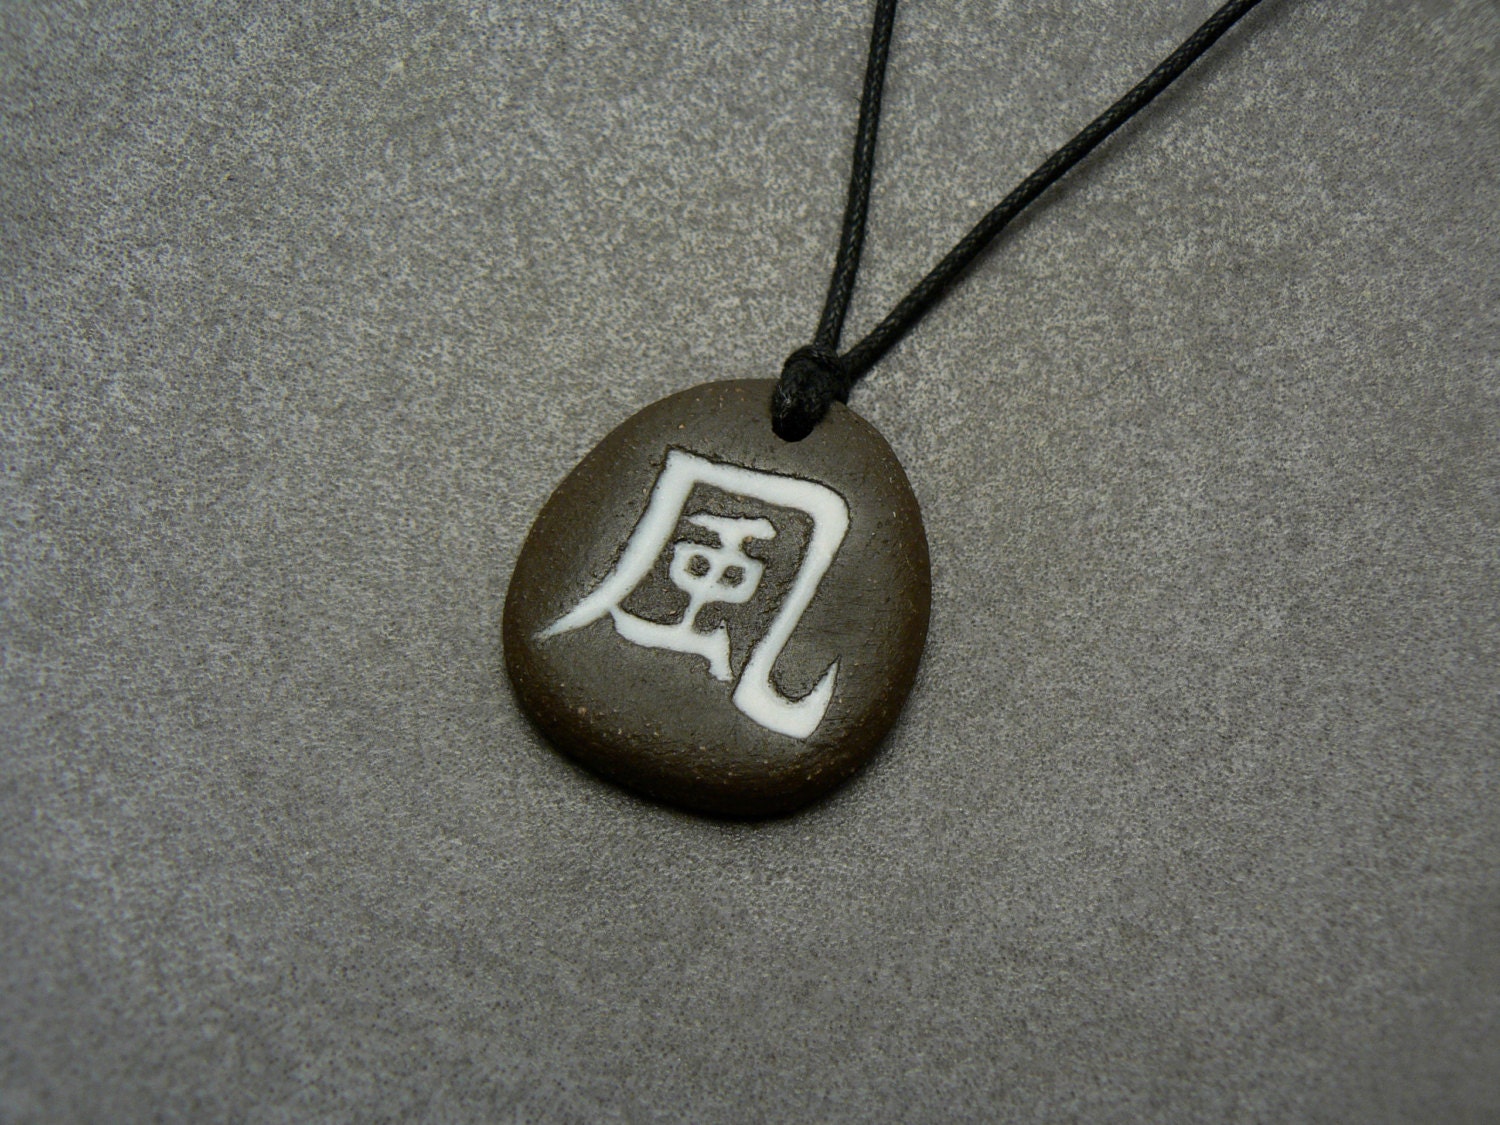 Samurai Japanese Kanji Necklace, Japanese Jewelry, Japanese Gifts, Japanese  Necklace, Gift for Men Women, Mens Necklace, Mens Jewelry Gift 